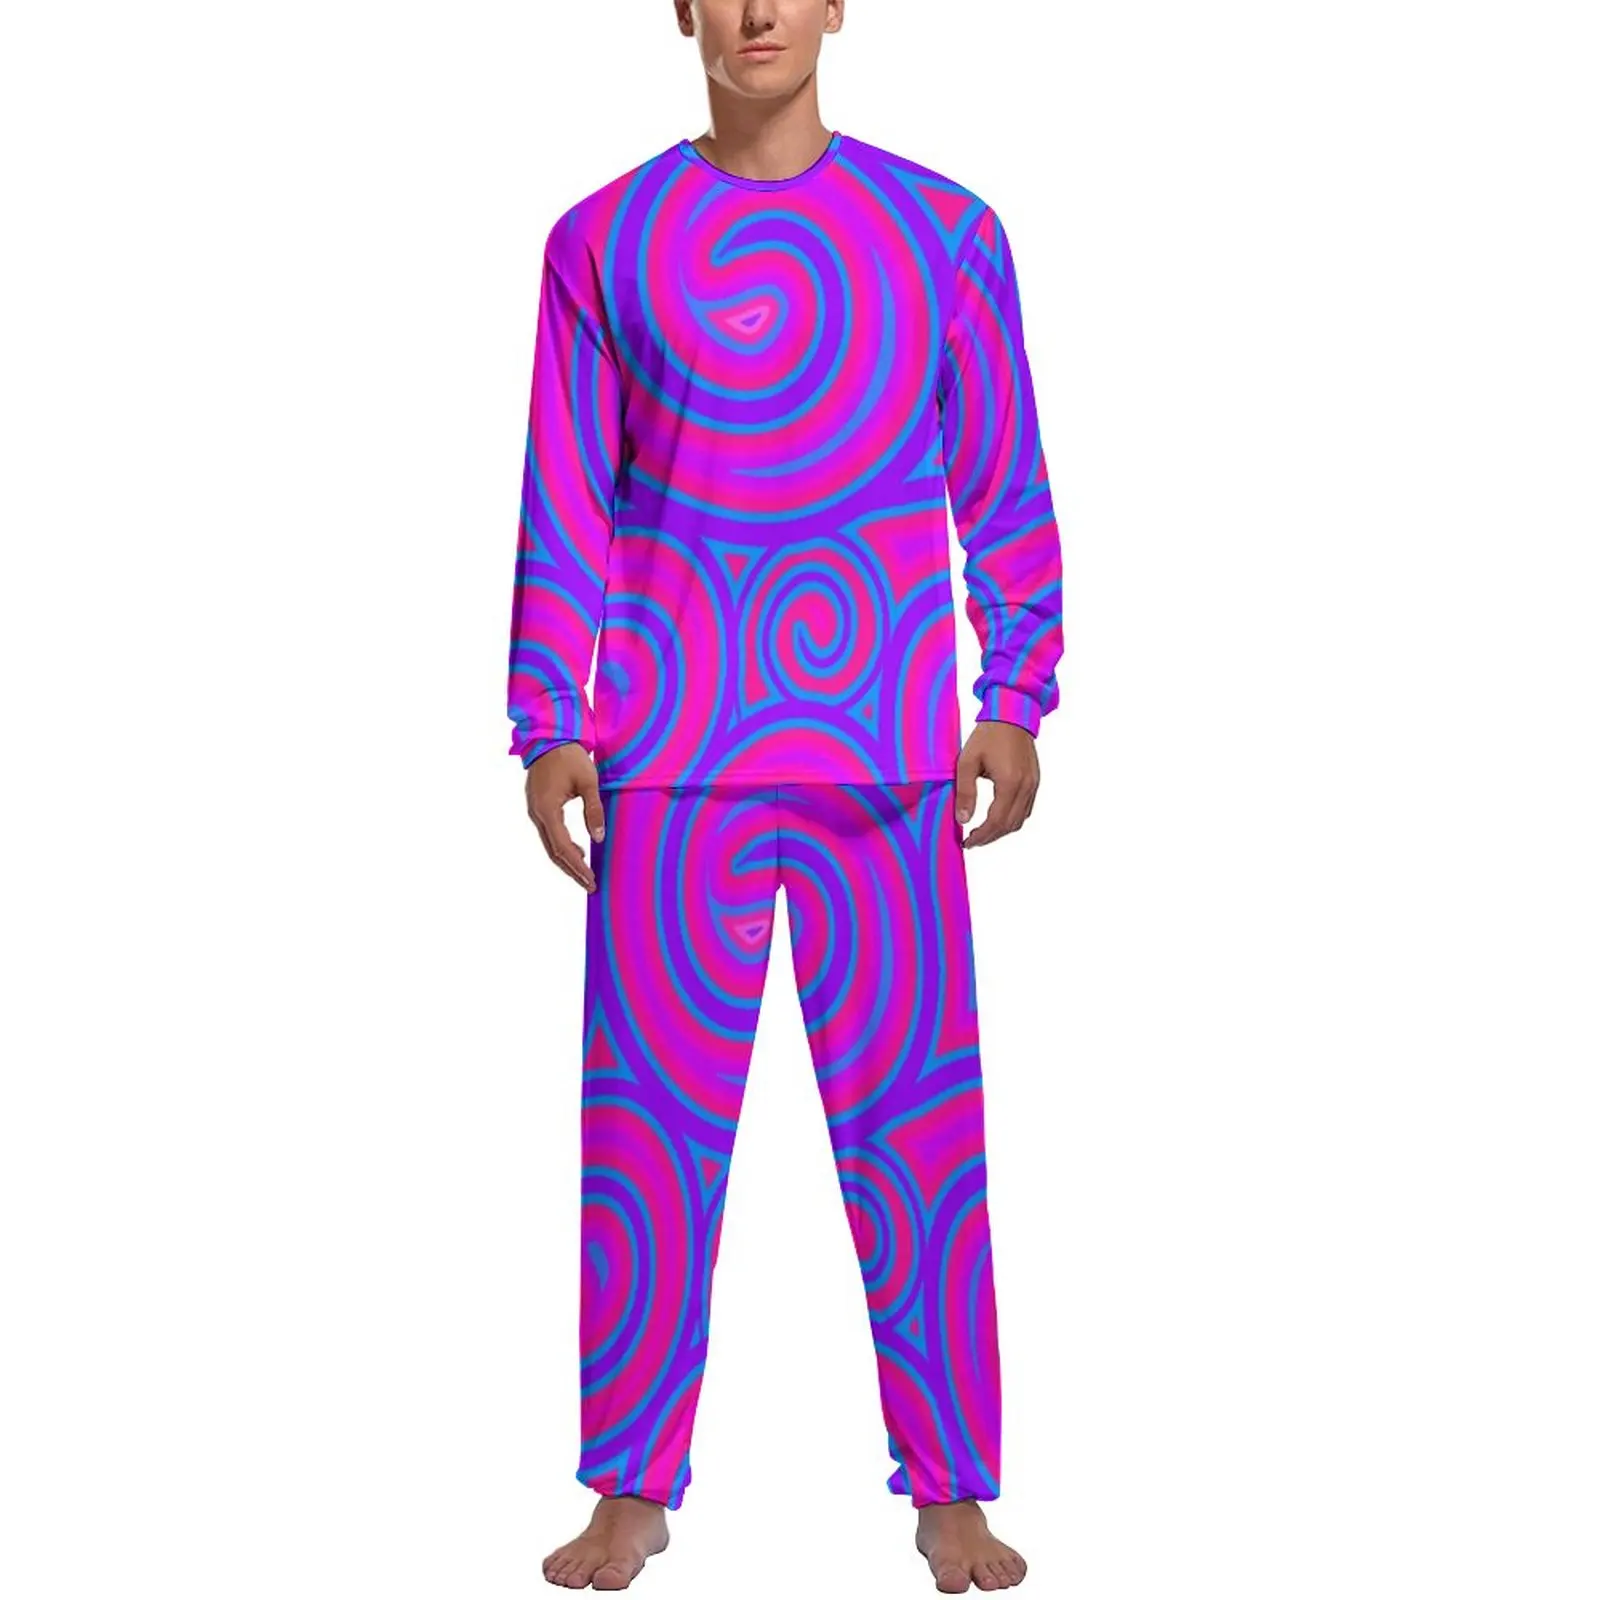 

Psychedelic Trippy Hippy Pajamas Long Sleeve Retro Swirl Print 2 Pieces Night Pajama Sets Spring Men Graphic Fashion Nightwear